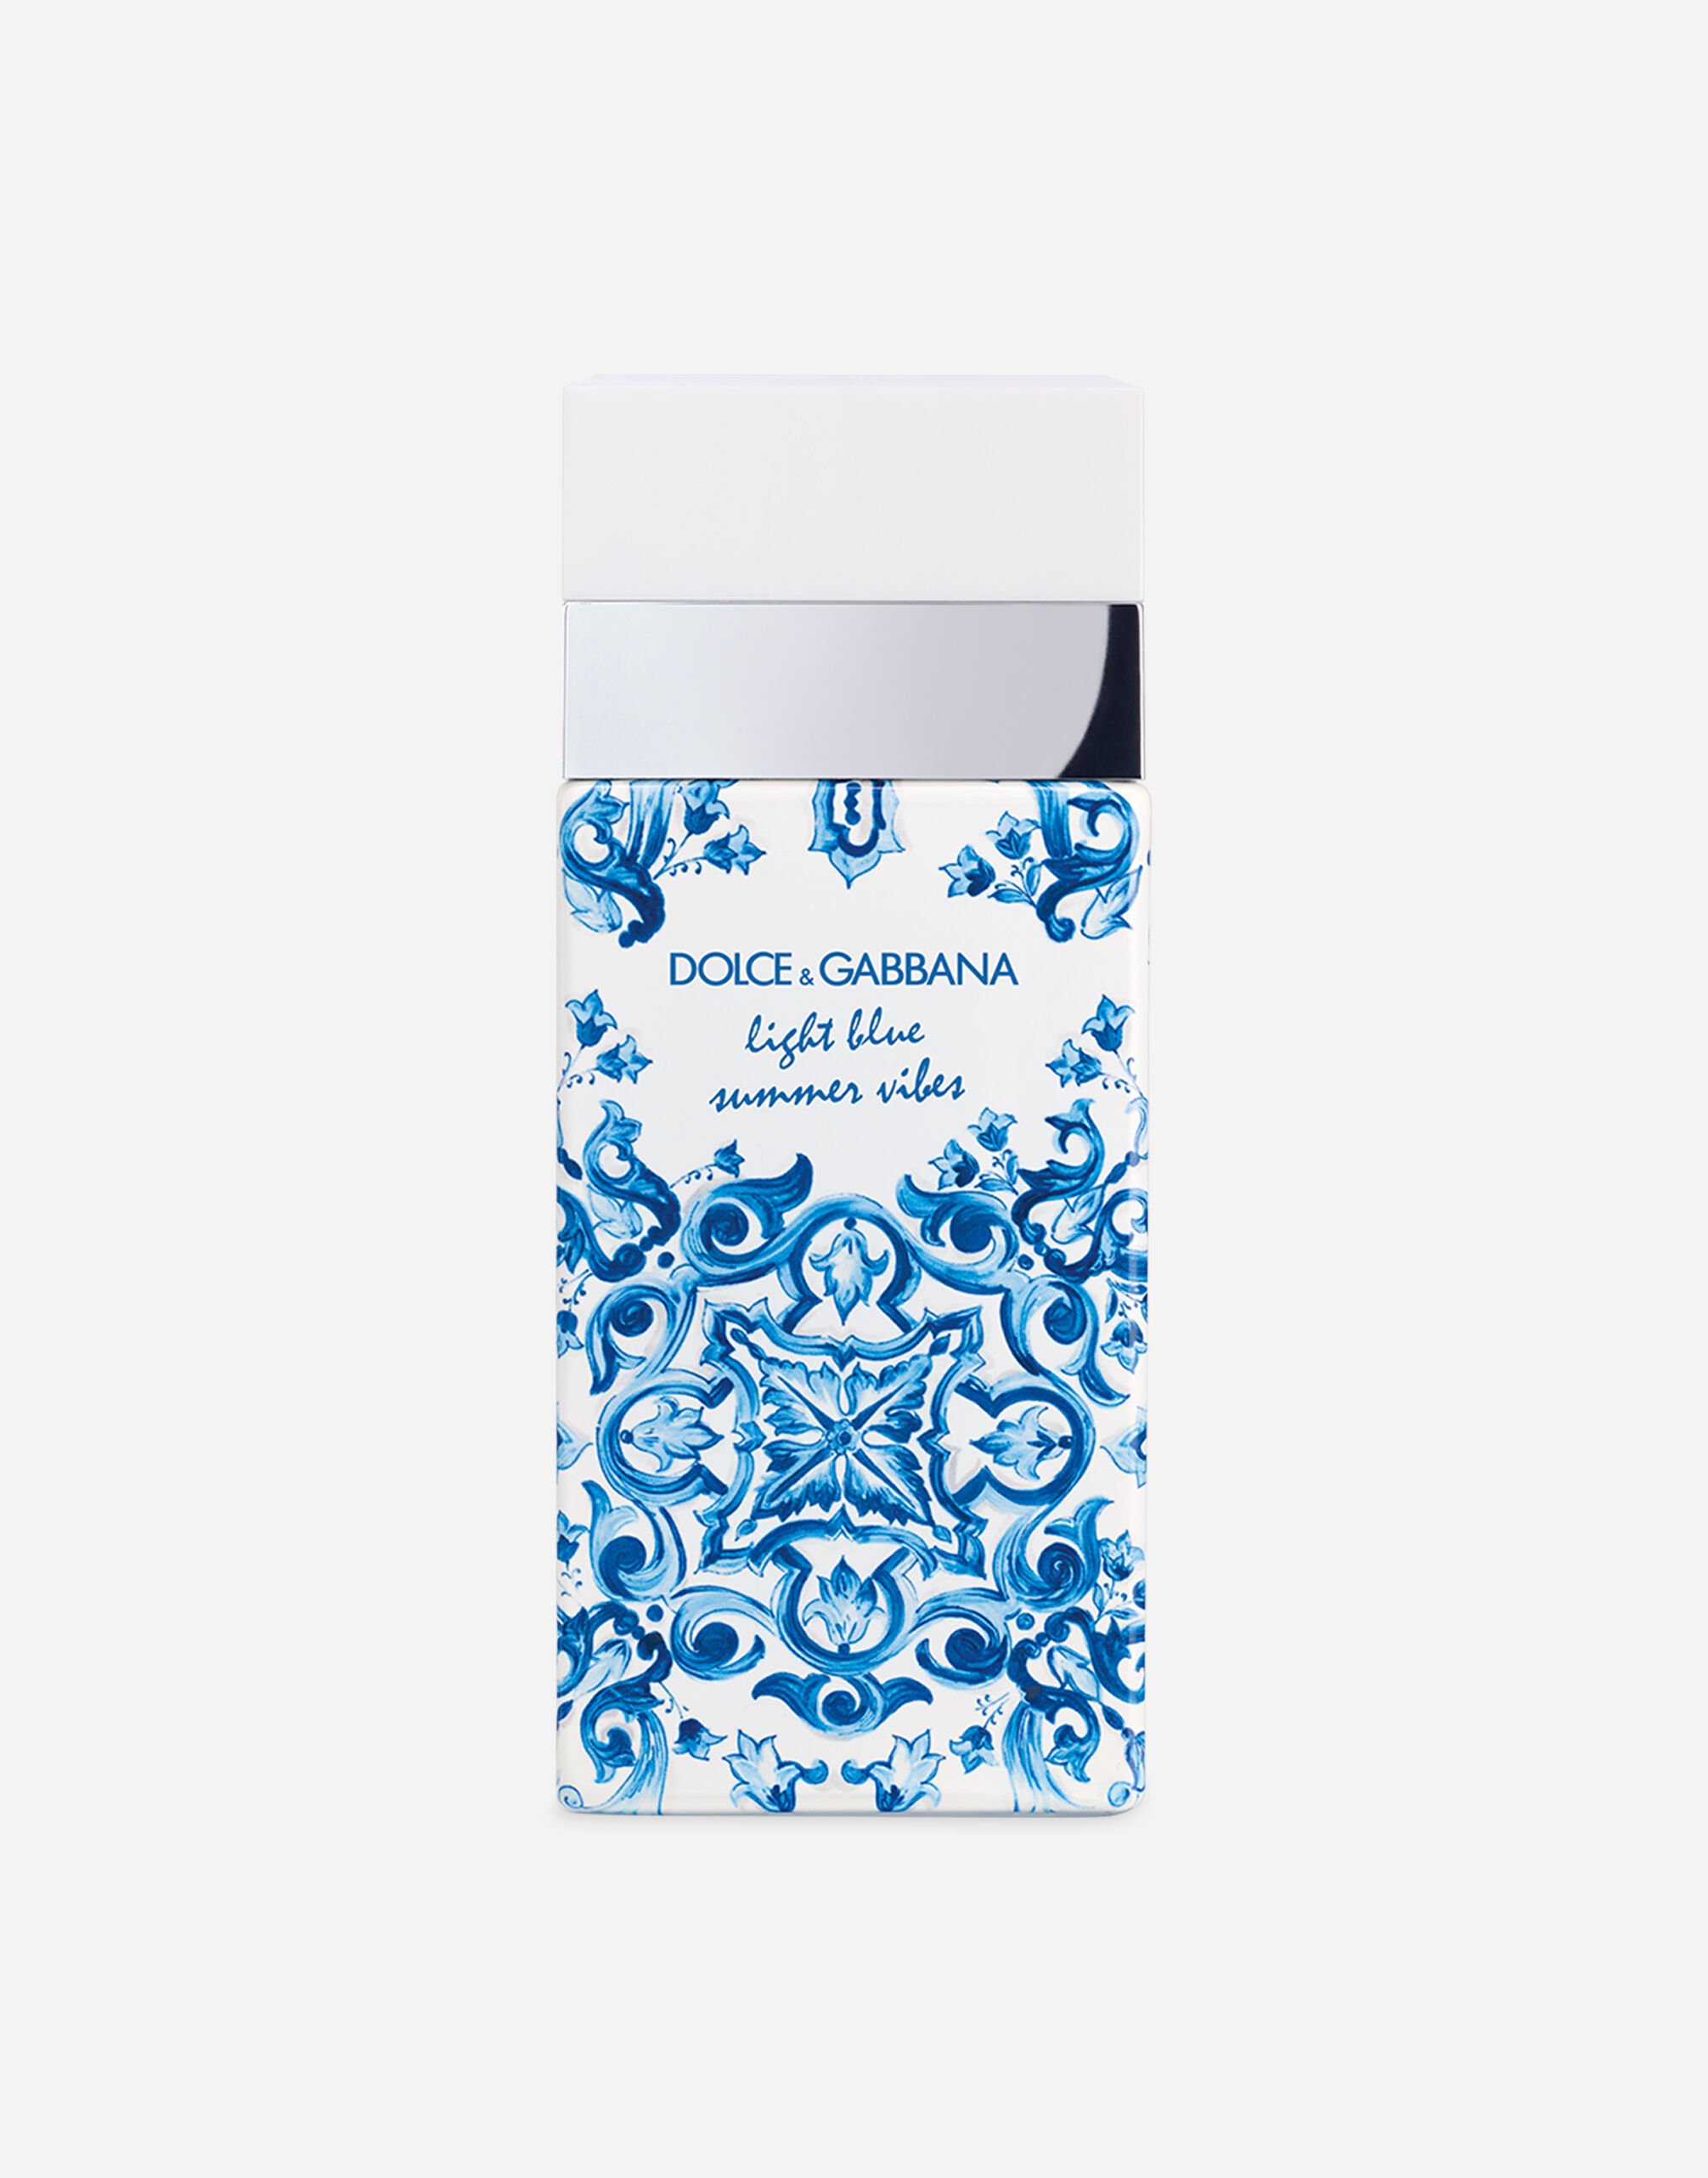 Dolce & Gabbana Light Blue Summer Vibes Eau de Toilette Bianco CK1563B5845